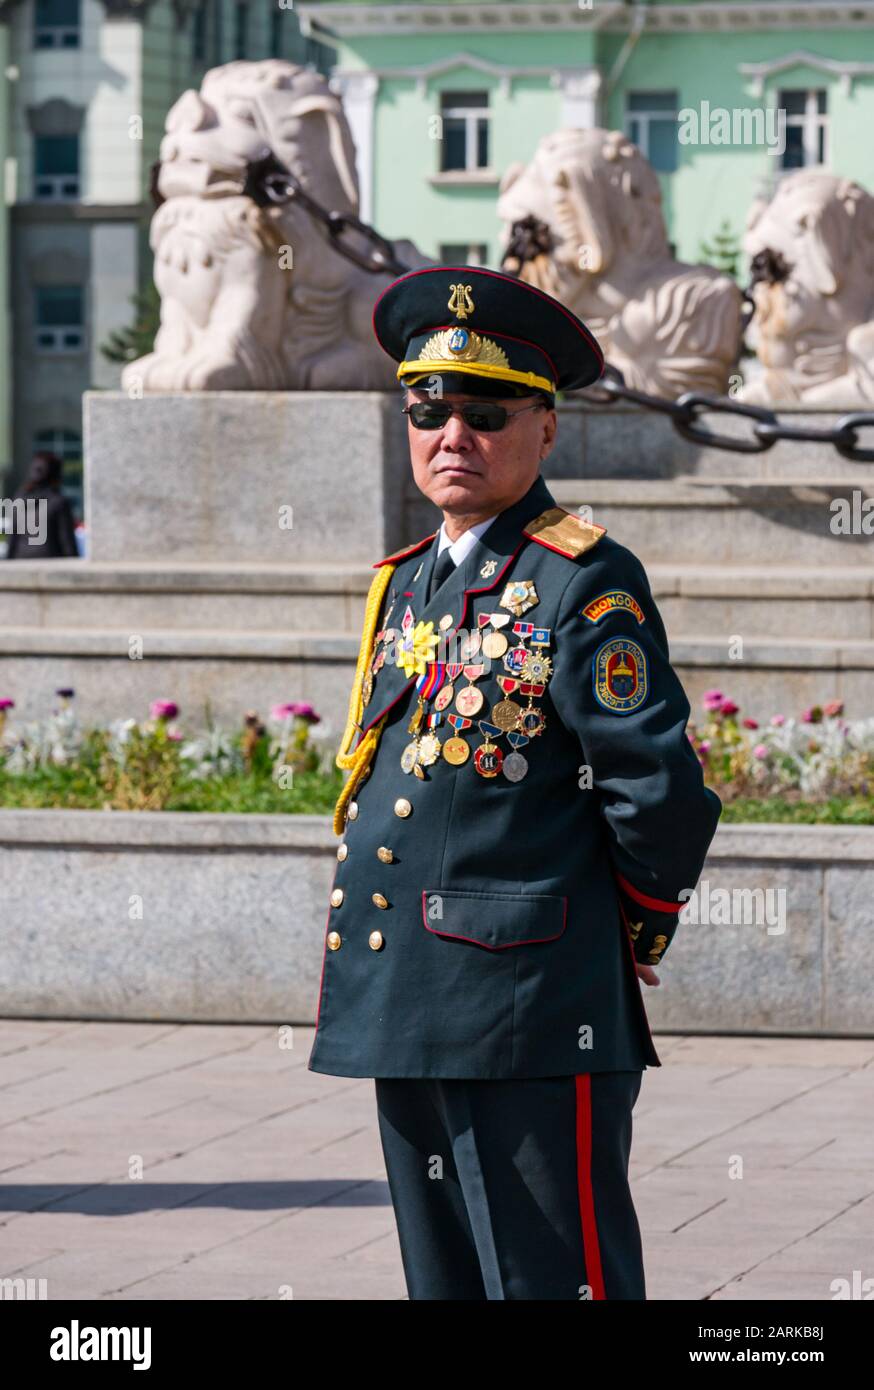 Uomo che indossa uniforme militare con medaglie, Piazza Sükhbaatar, Ulaanbaatar, Mongolia Foto Stock